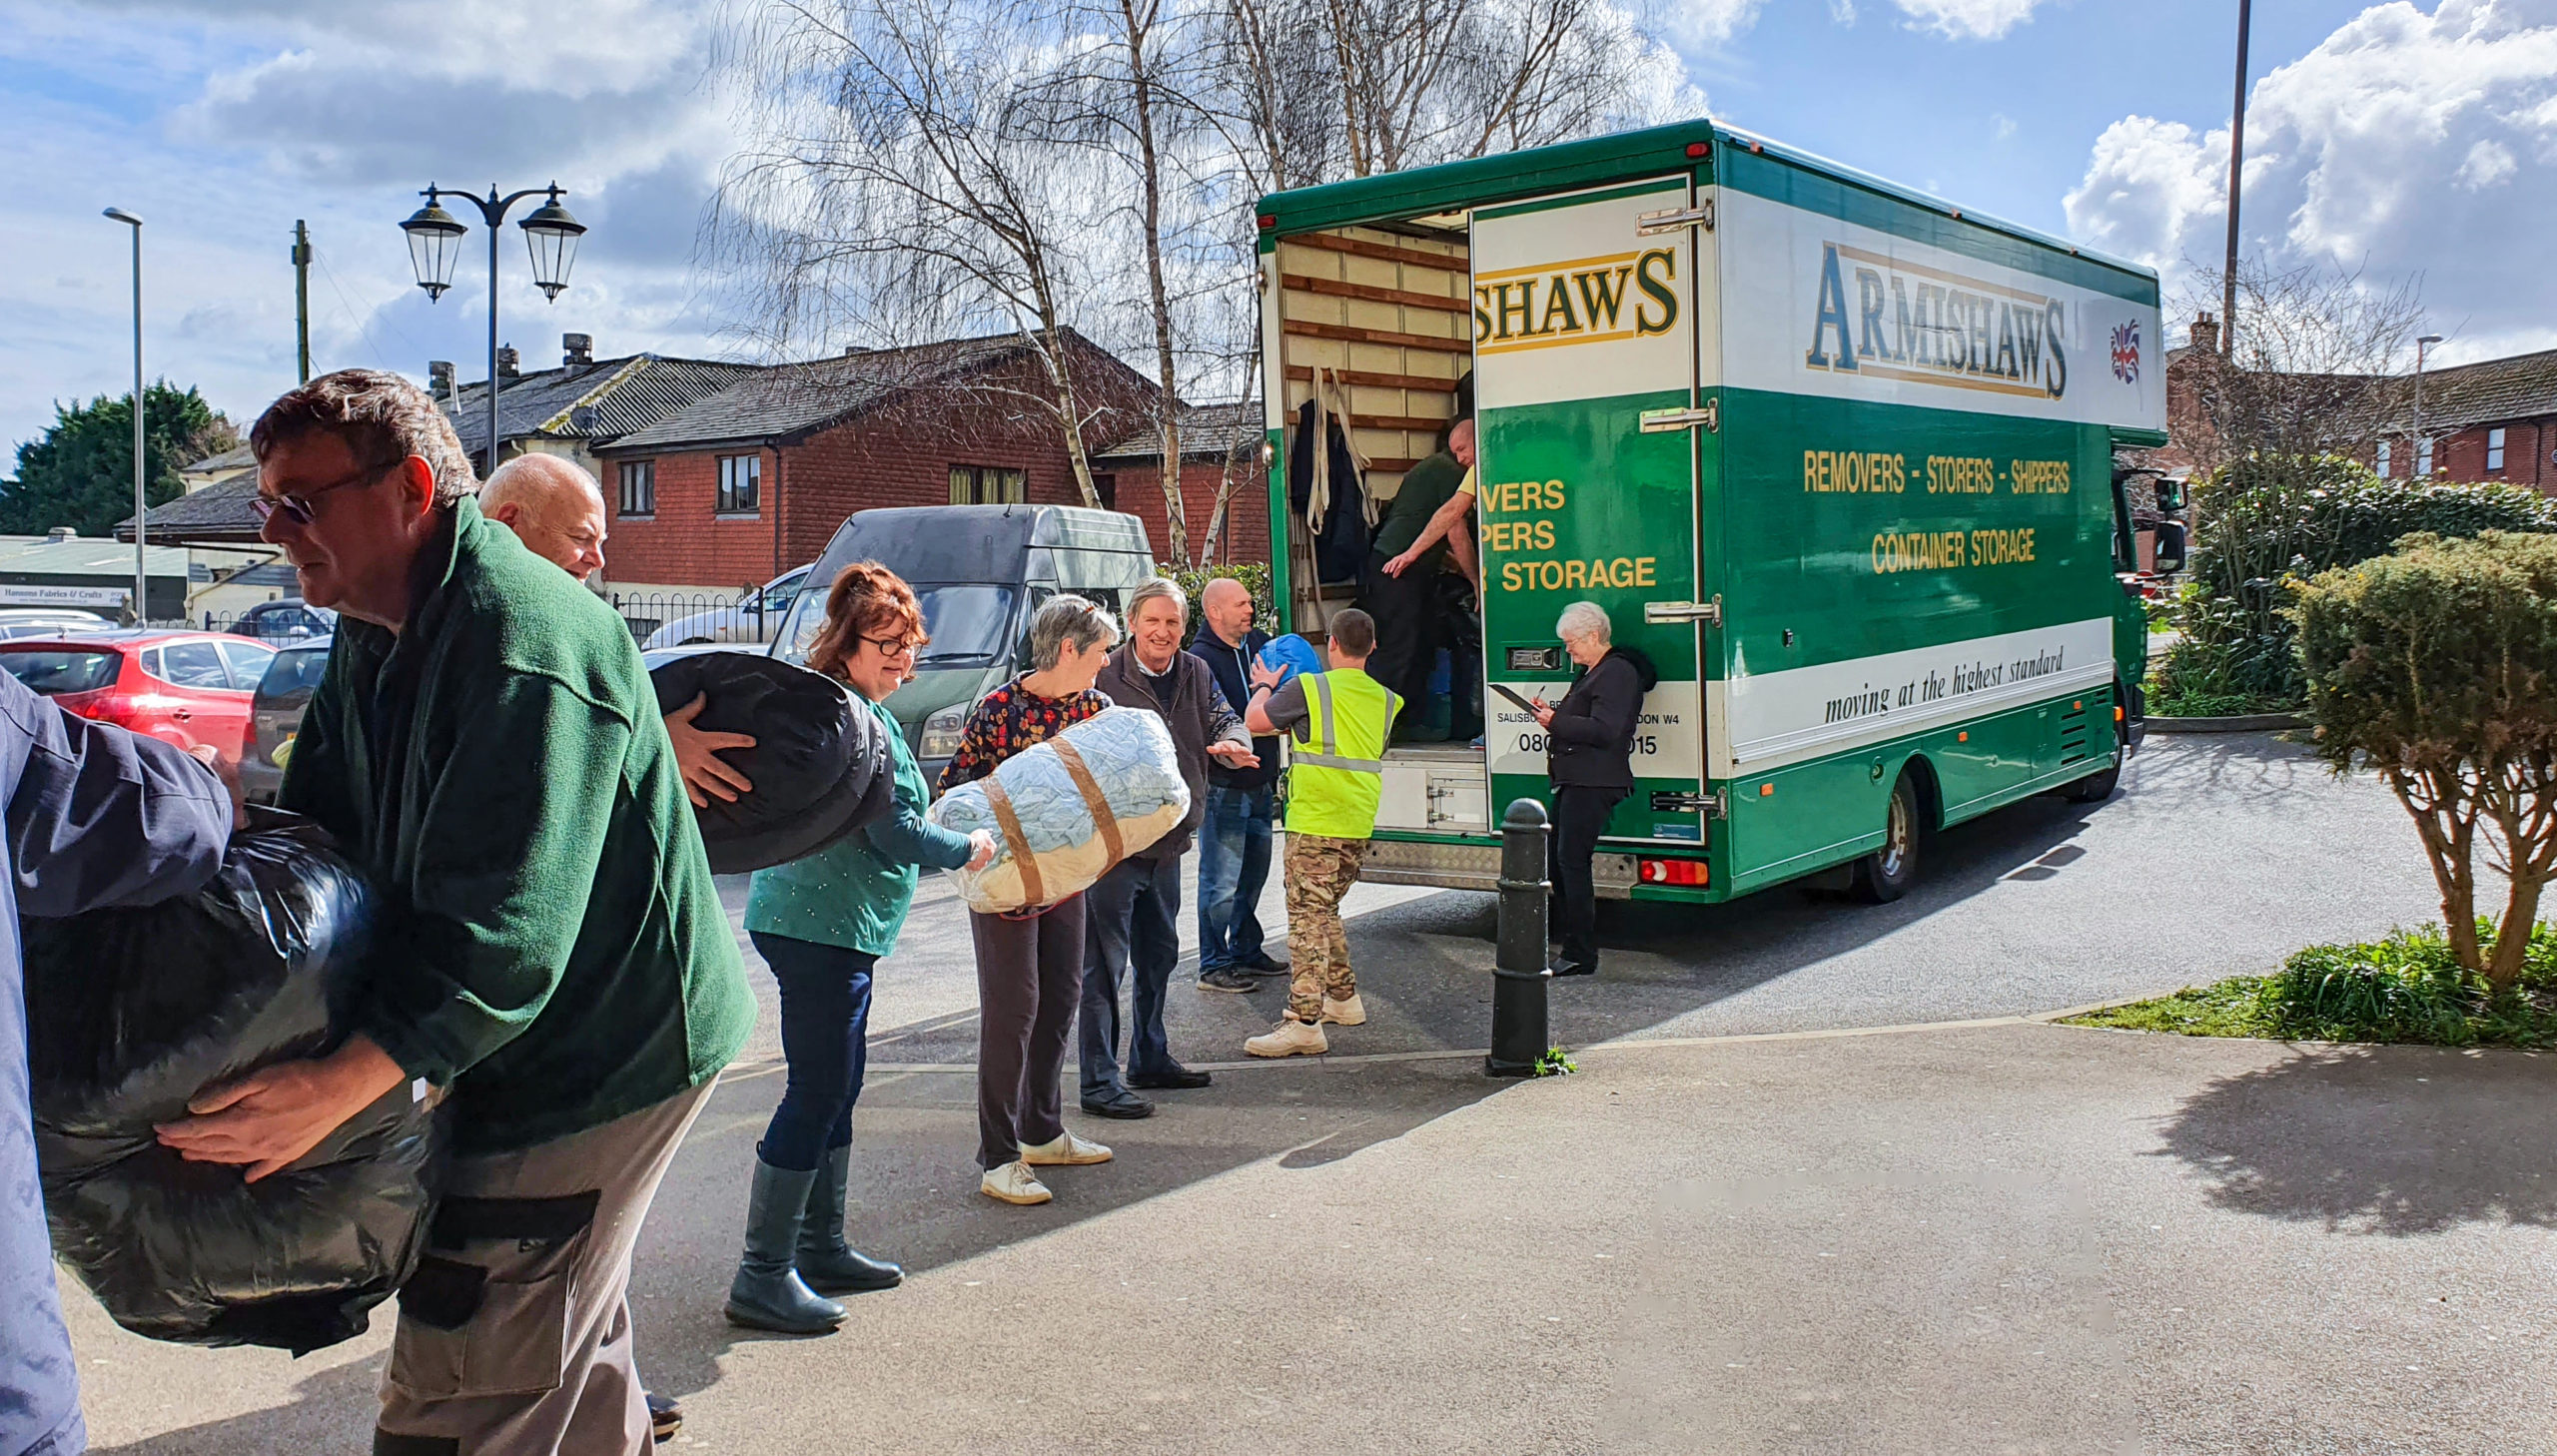 Armishaws Removals help with Ukraine Refugee Donations